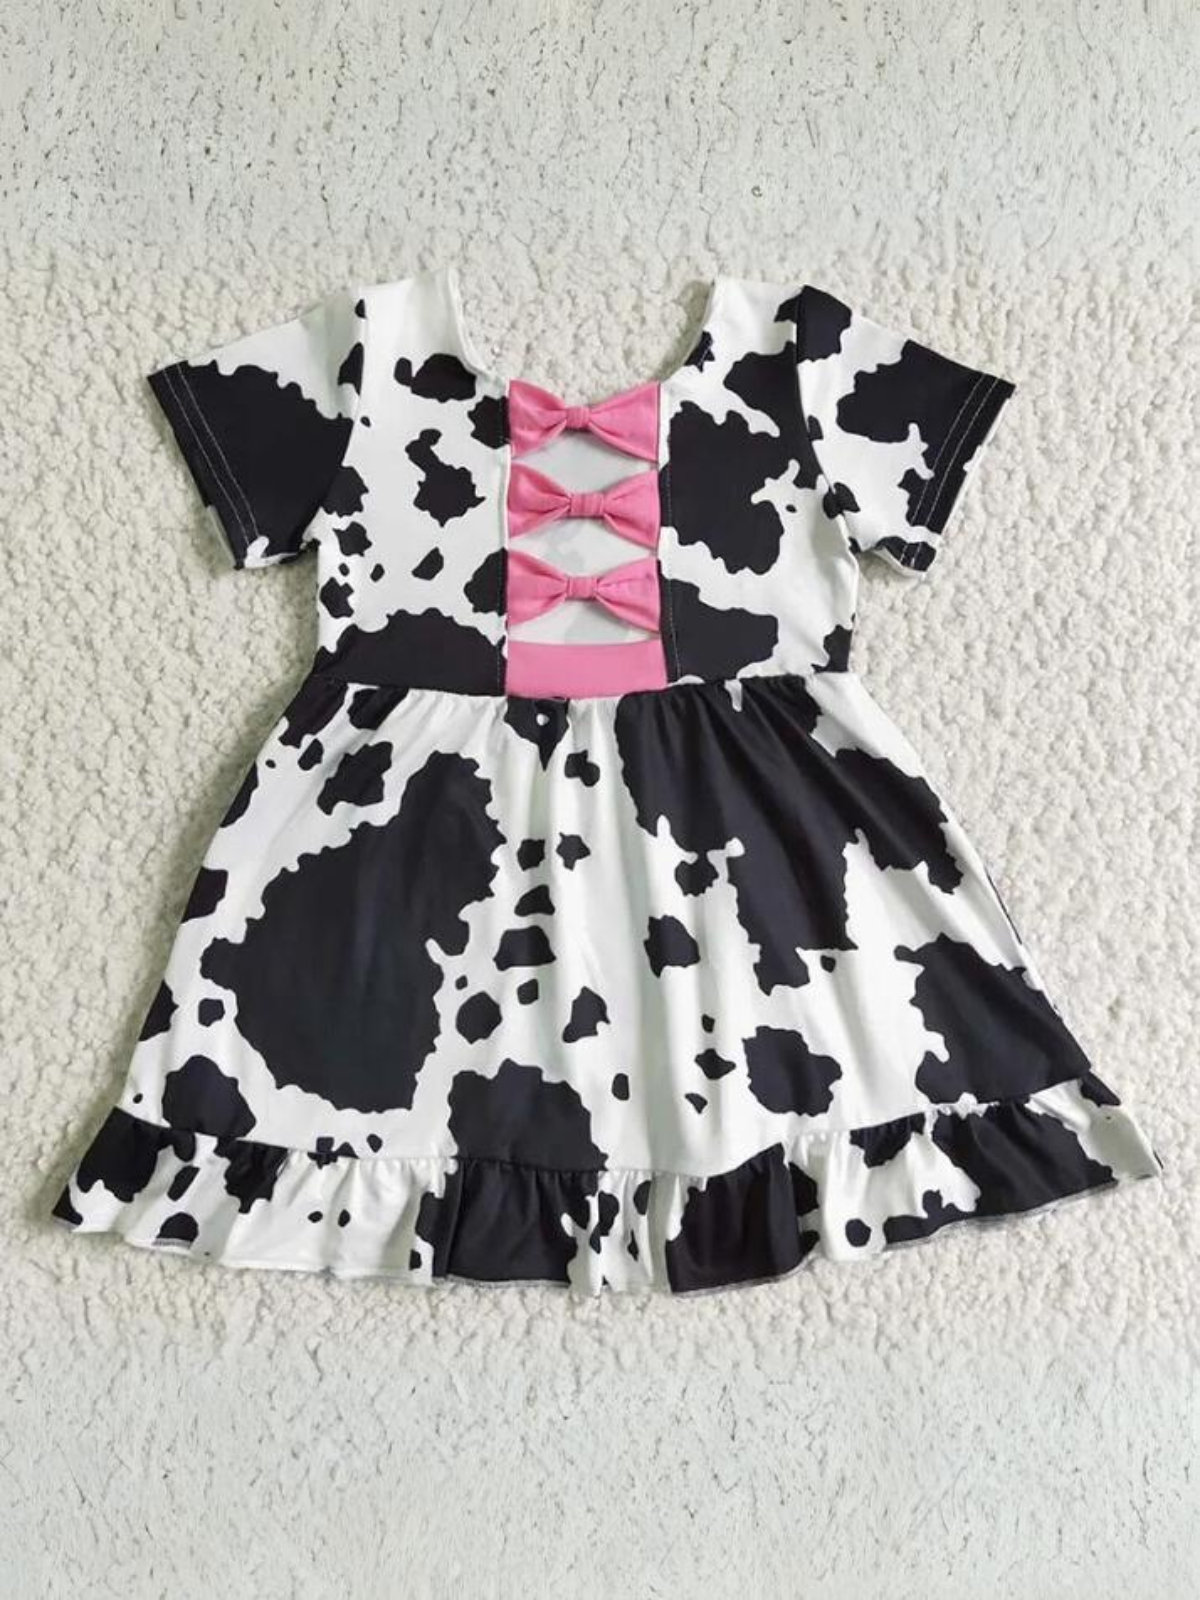 Mia Belle Girls Cow Print Ruffle Dress | Girls Spring Dresses